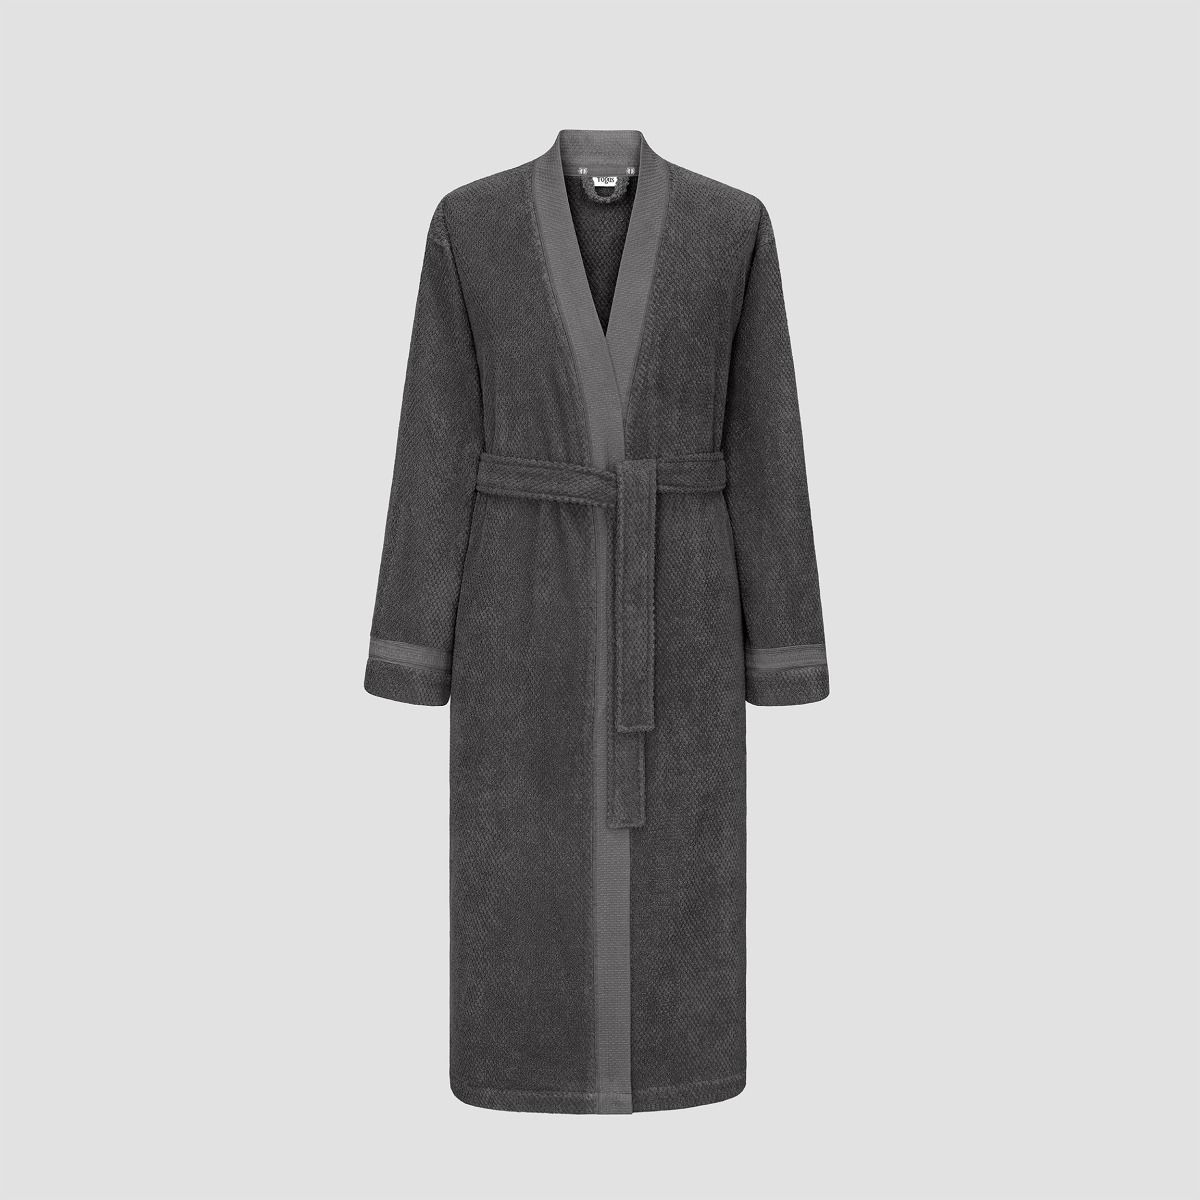 Банный халат Миэль цвет: темно-серый (3XL)